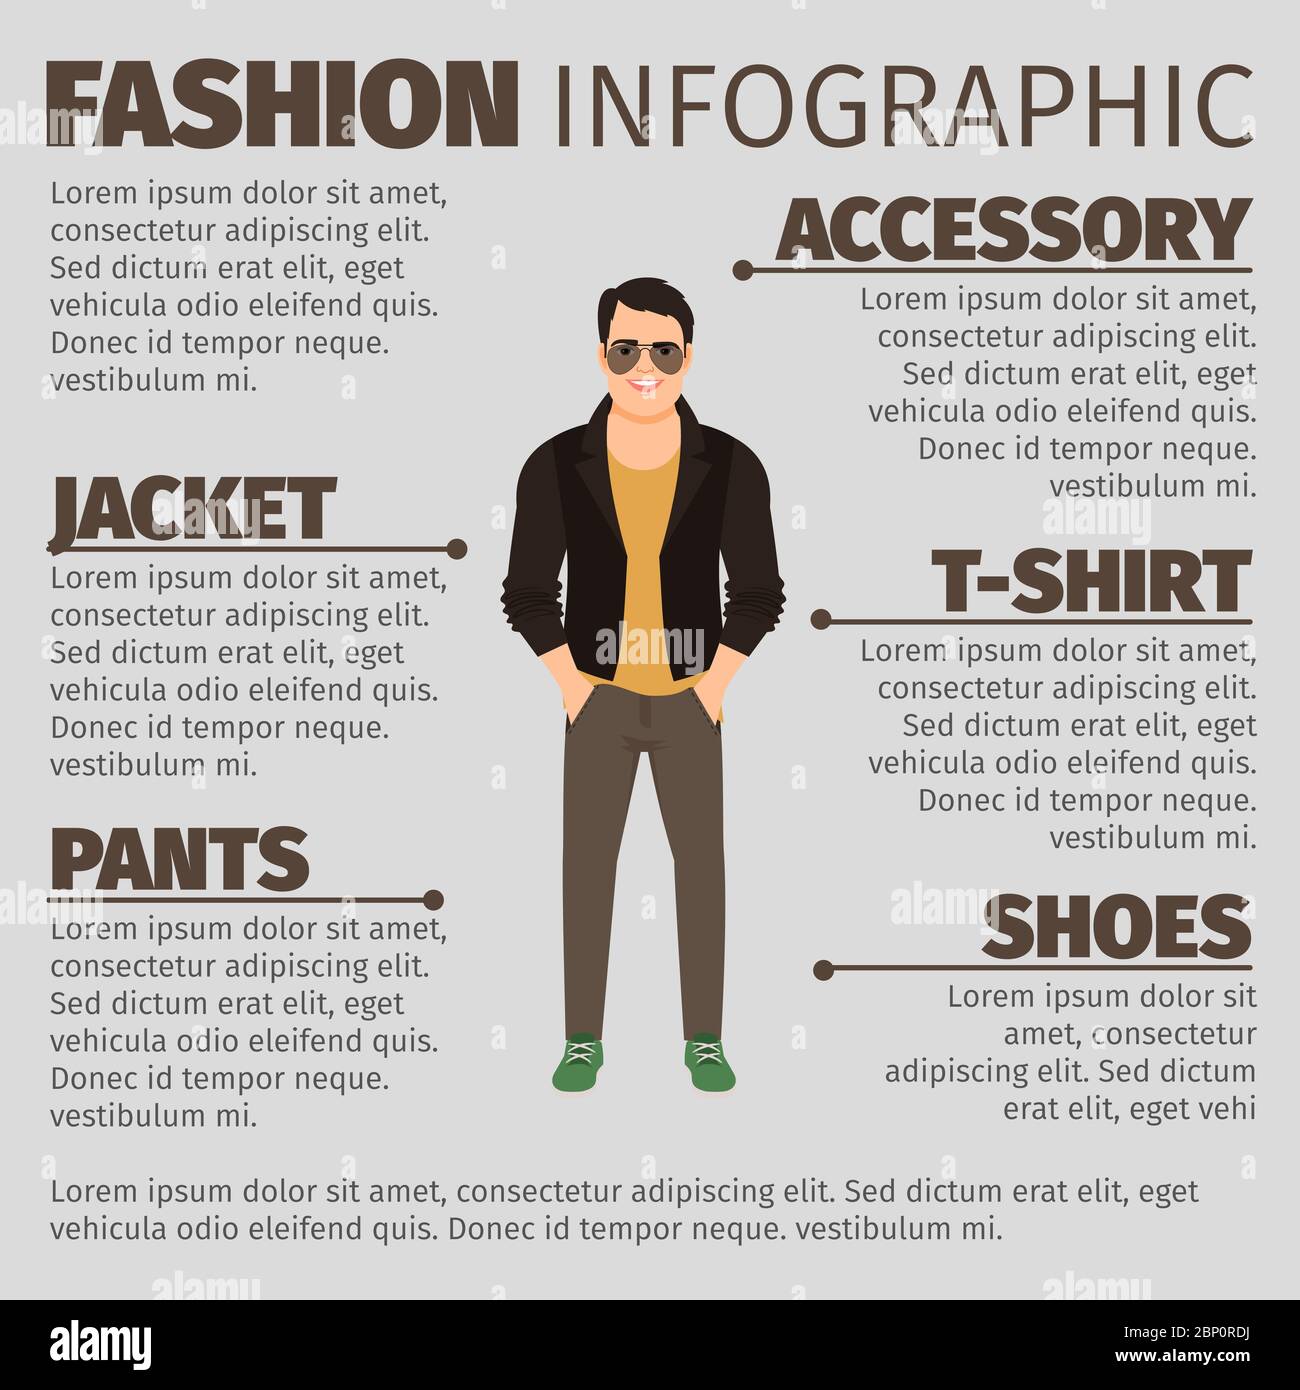 Mode Infografik mit Mann in Lederjacke. Vektorgrafik Stock Vektor